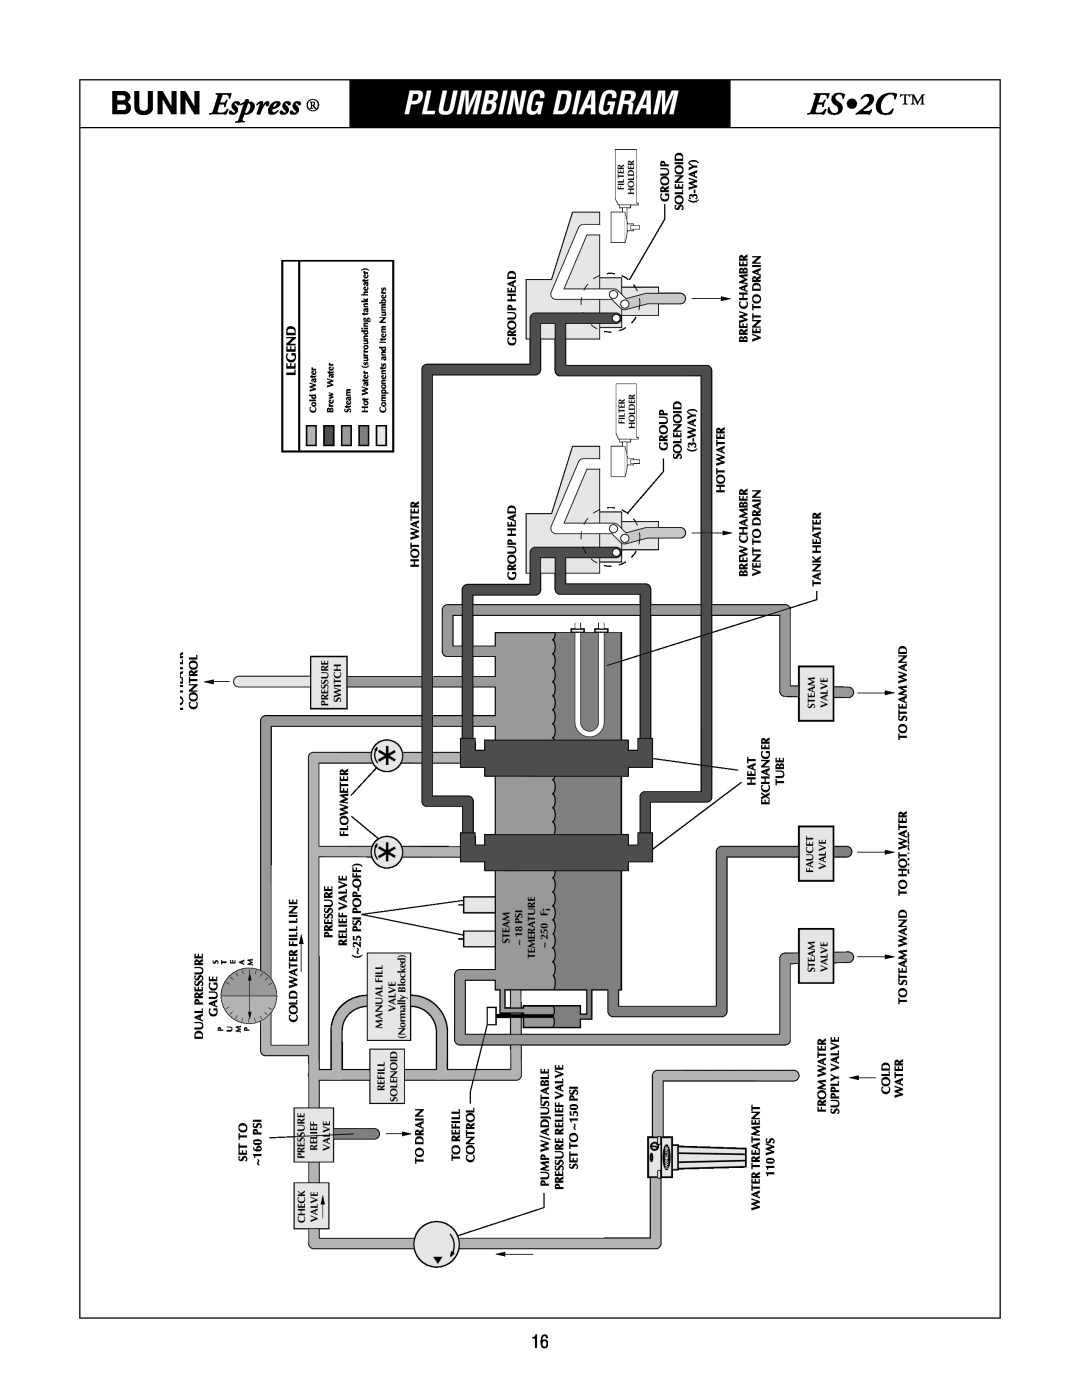 Bunn ES2C service manual Plumbing Diagram, BUNN Espress 